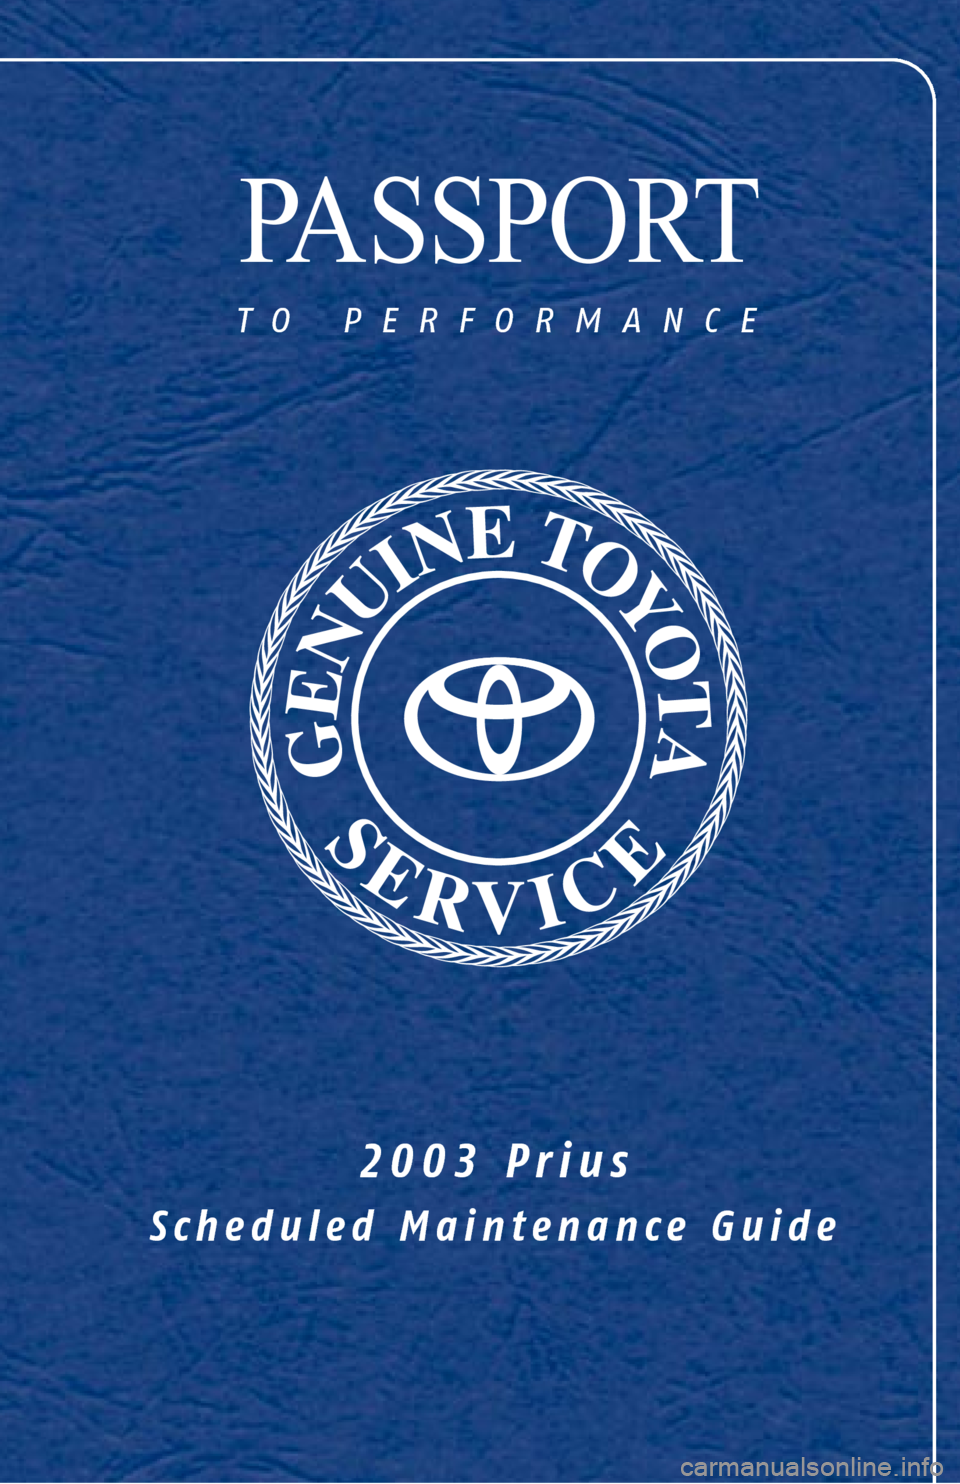 TOYOTA PRIUS 2003 1.G Scheduled Maintenance Guide PASSPORT
to performance
2003 Prius
Scheduled Maintenance Guide 